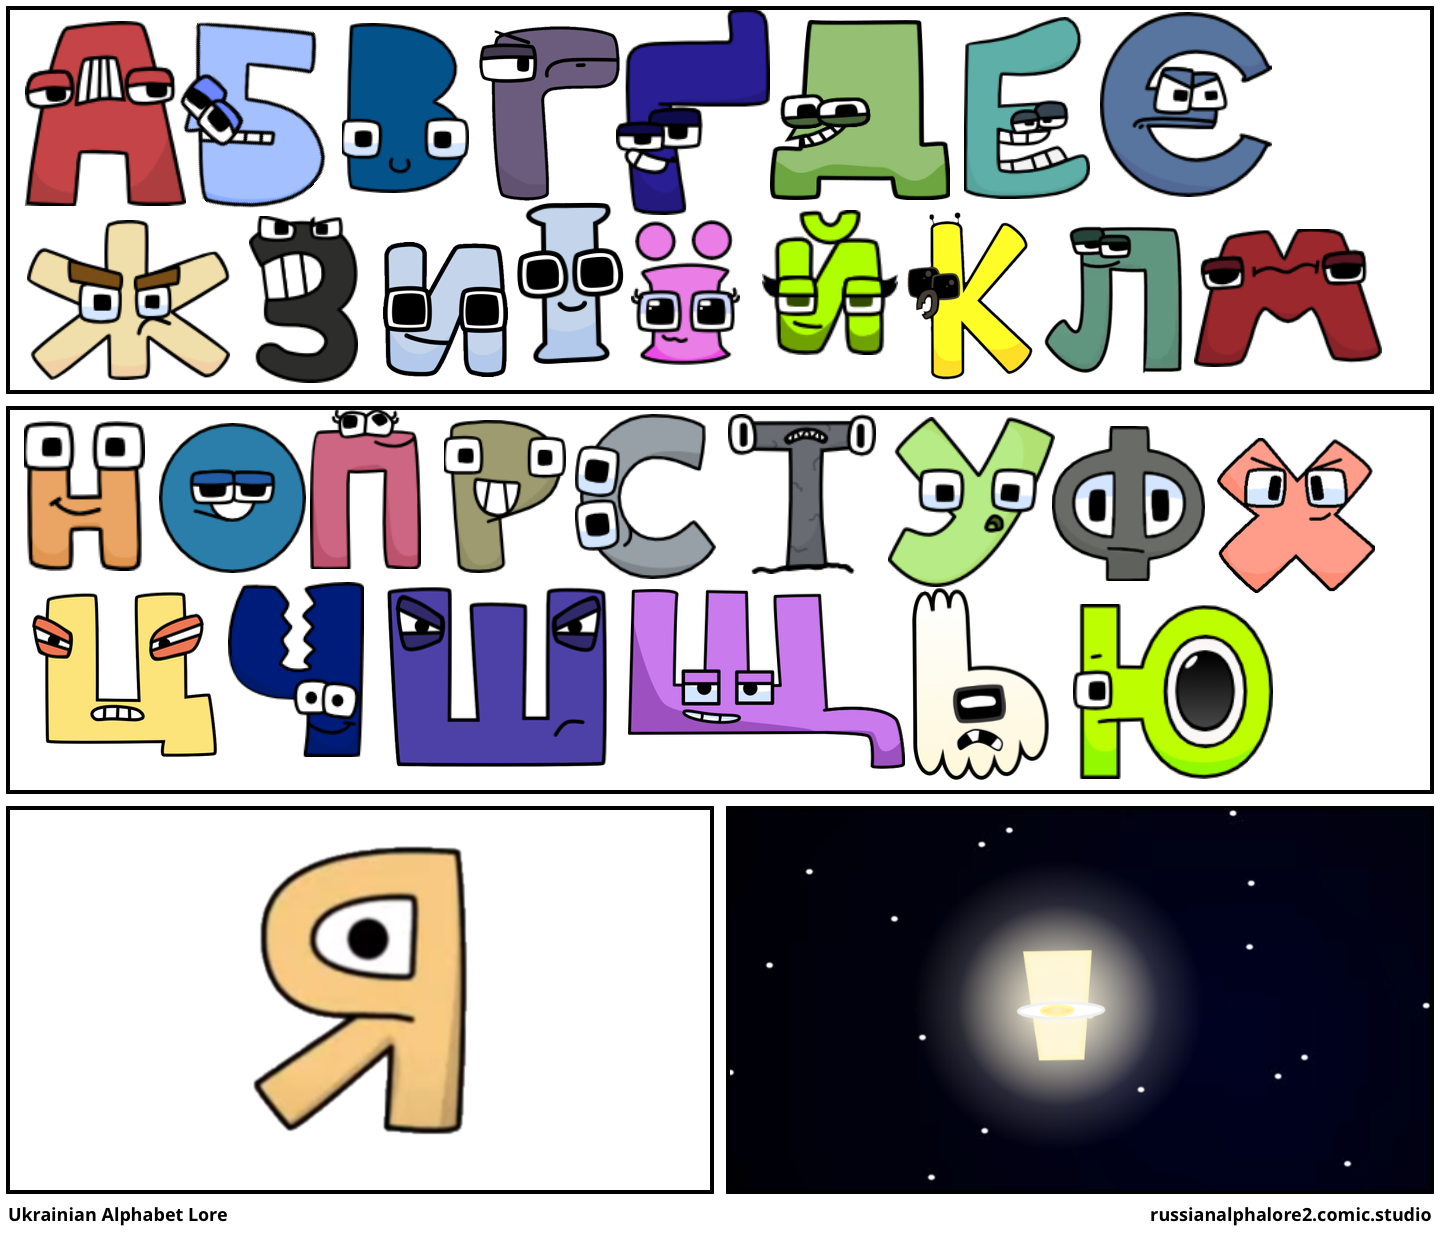 Ukrainian Alphabet Lore Concept Art (Ah - I) by BluShneki522 on